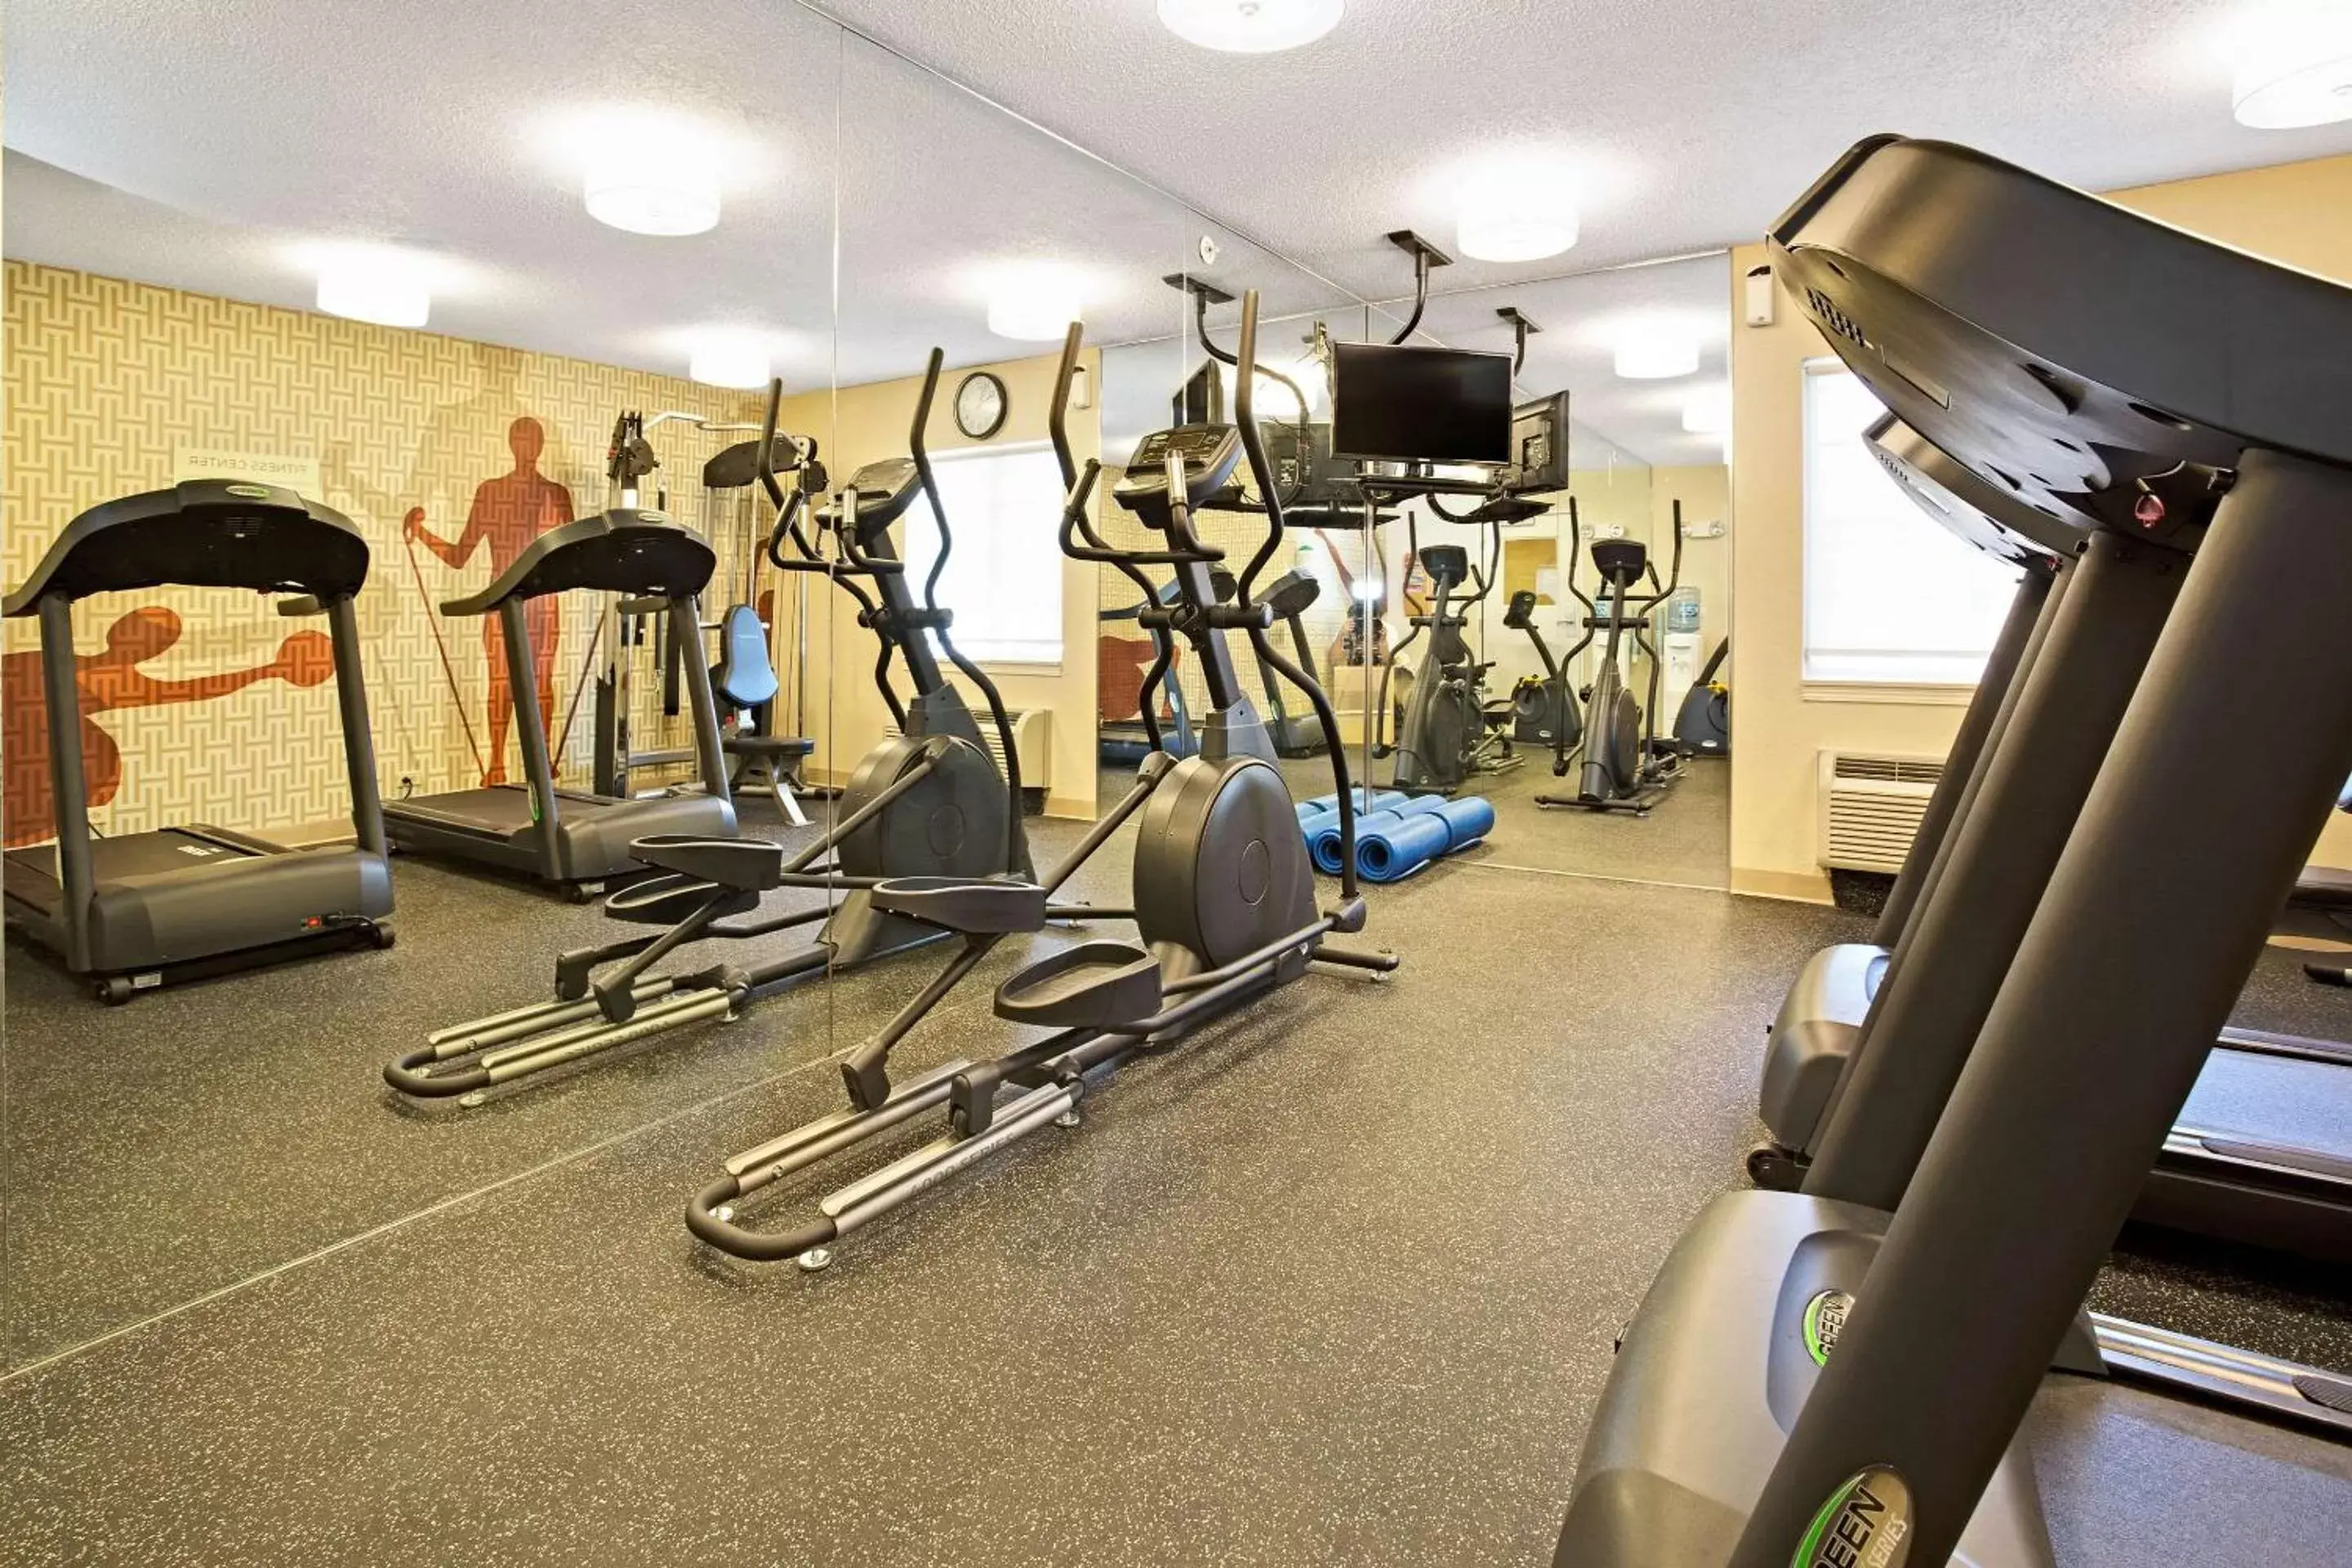 Fitness centre/facilities, Fitness Center/Facilities in MainStay Suites Cincinnati Blue Ash